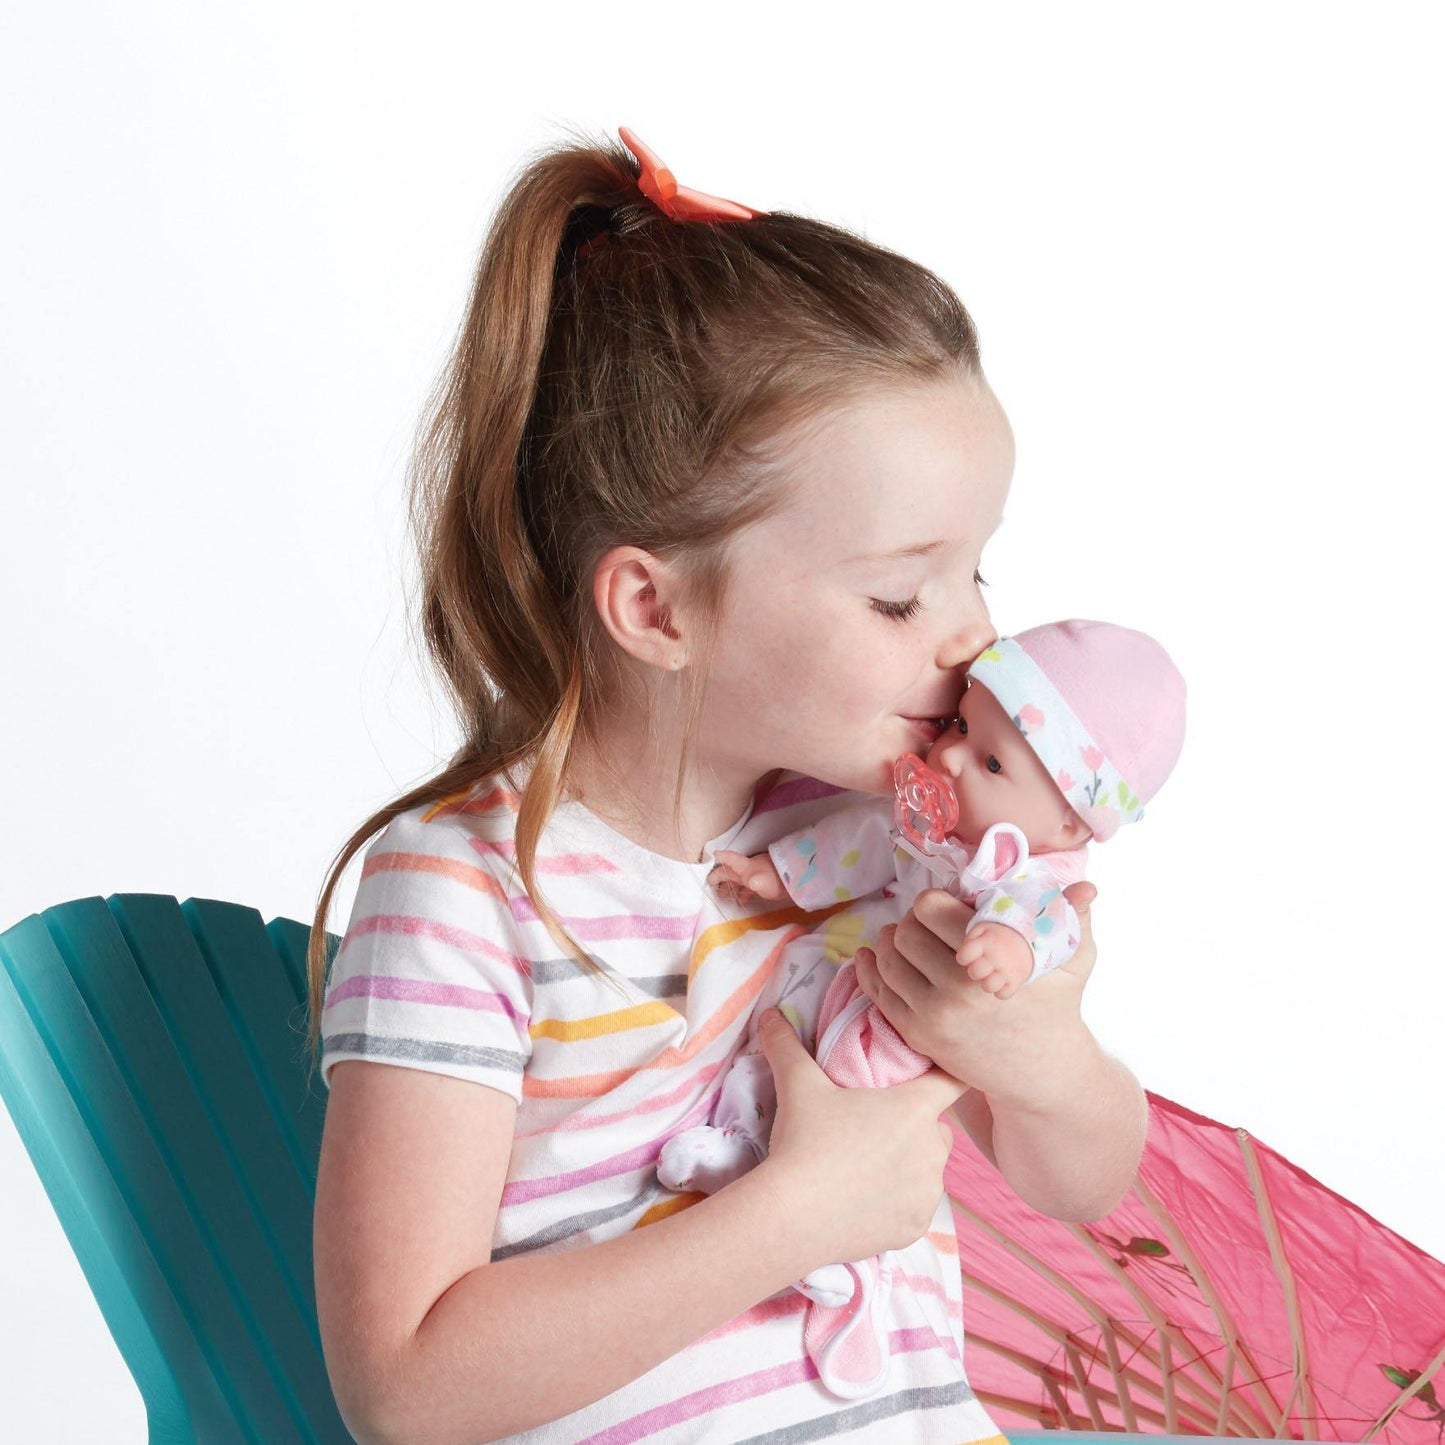 JC Toys, La Baby 11-inch Soft Body Play Doll Body Travel Case Gift Set, Pink. - JC Toys Group Inc.